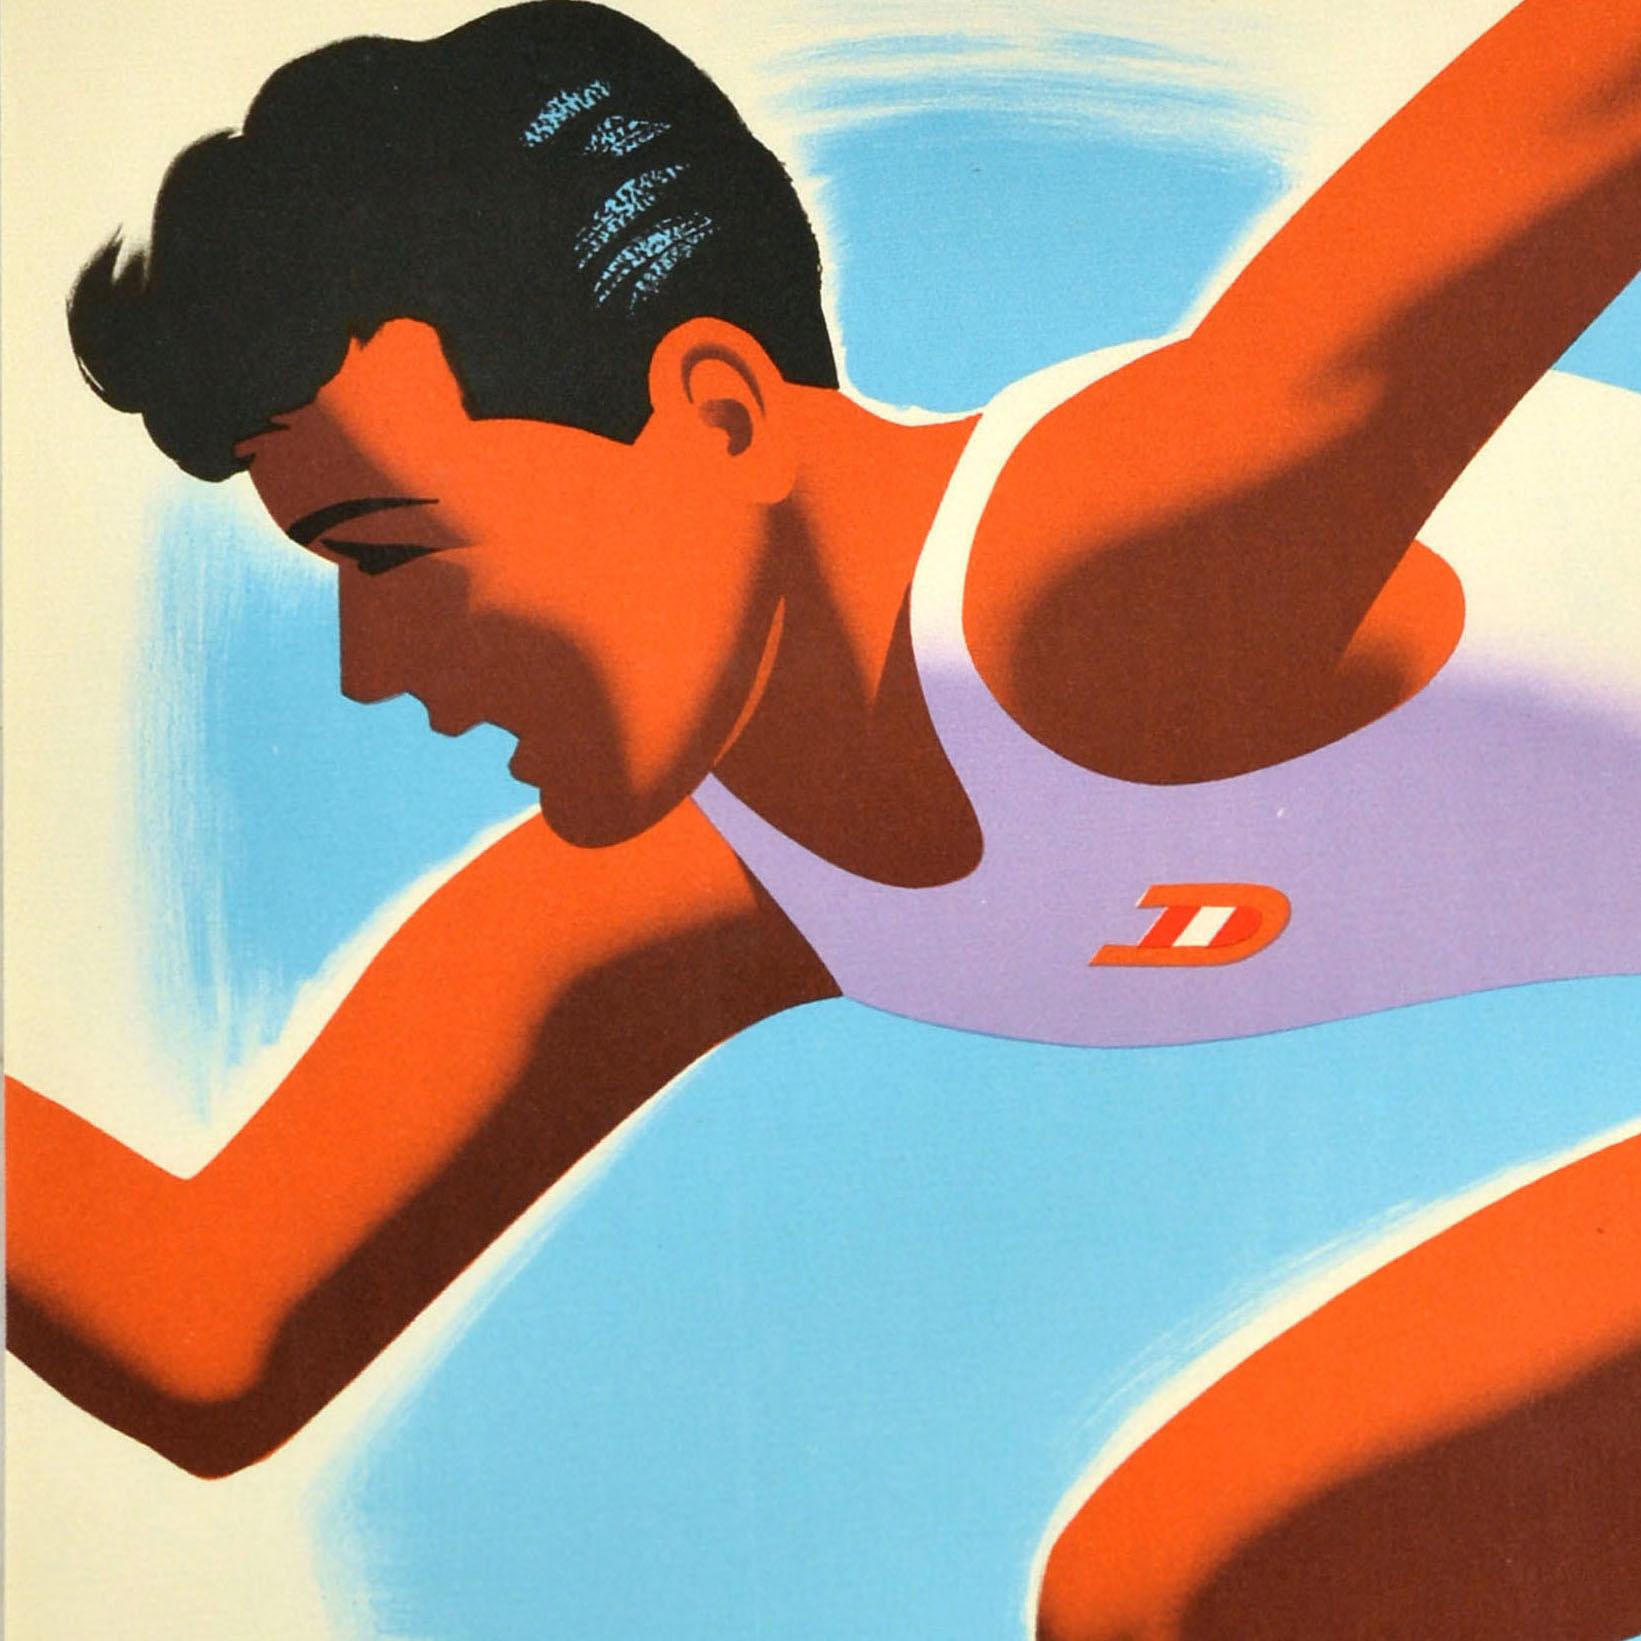 Original Vintage Sports Poster Union Jugendsportfest Youth Sport Festival Vienna - Print by Atelier Hofmann